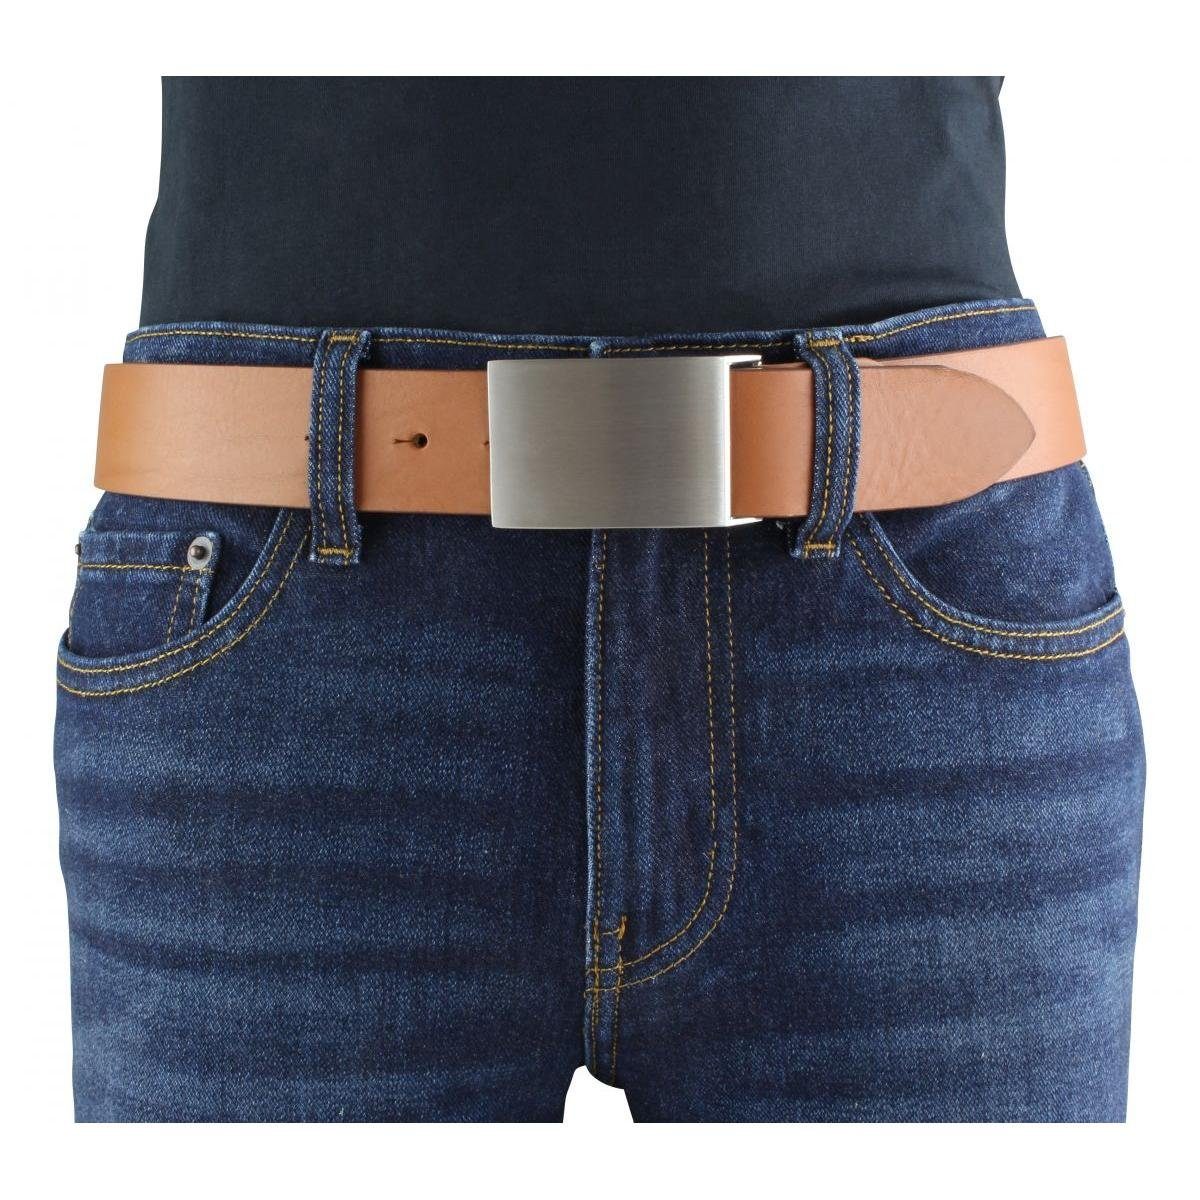 Silber Jeans für Dunkelgrau, BELTINGER Ledergürtel Jeans-Gürtel cm Herren 4,0 - Gürtel 40mm Vollrindleder aus -